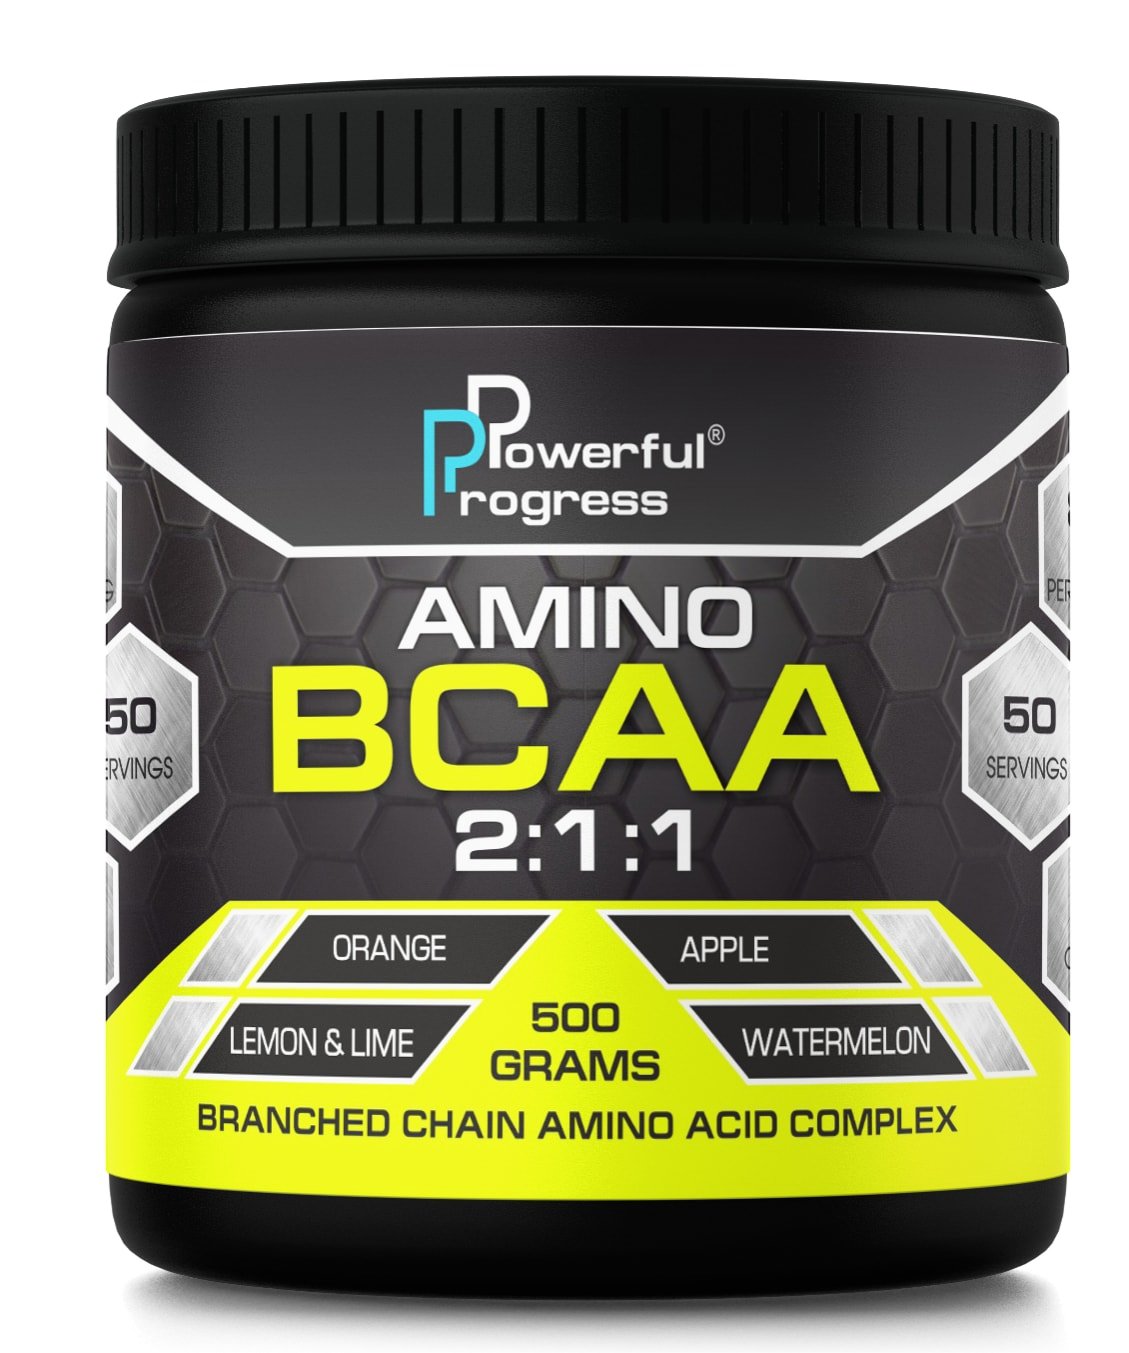 Amino BCAA, 500 g, Powerful Progress. BCAA. Weight Loss recovery Anti-catabolic properties Lean muscle mass 